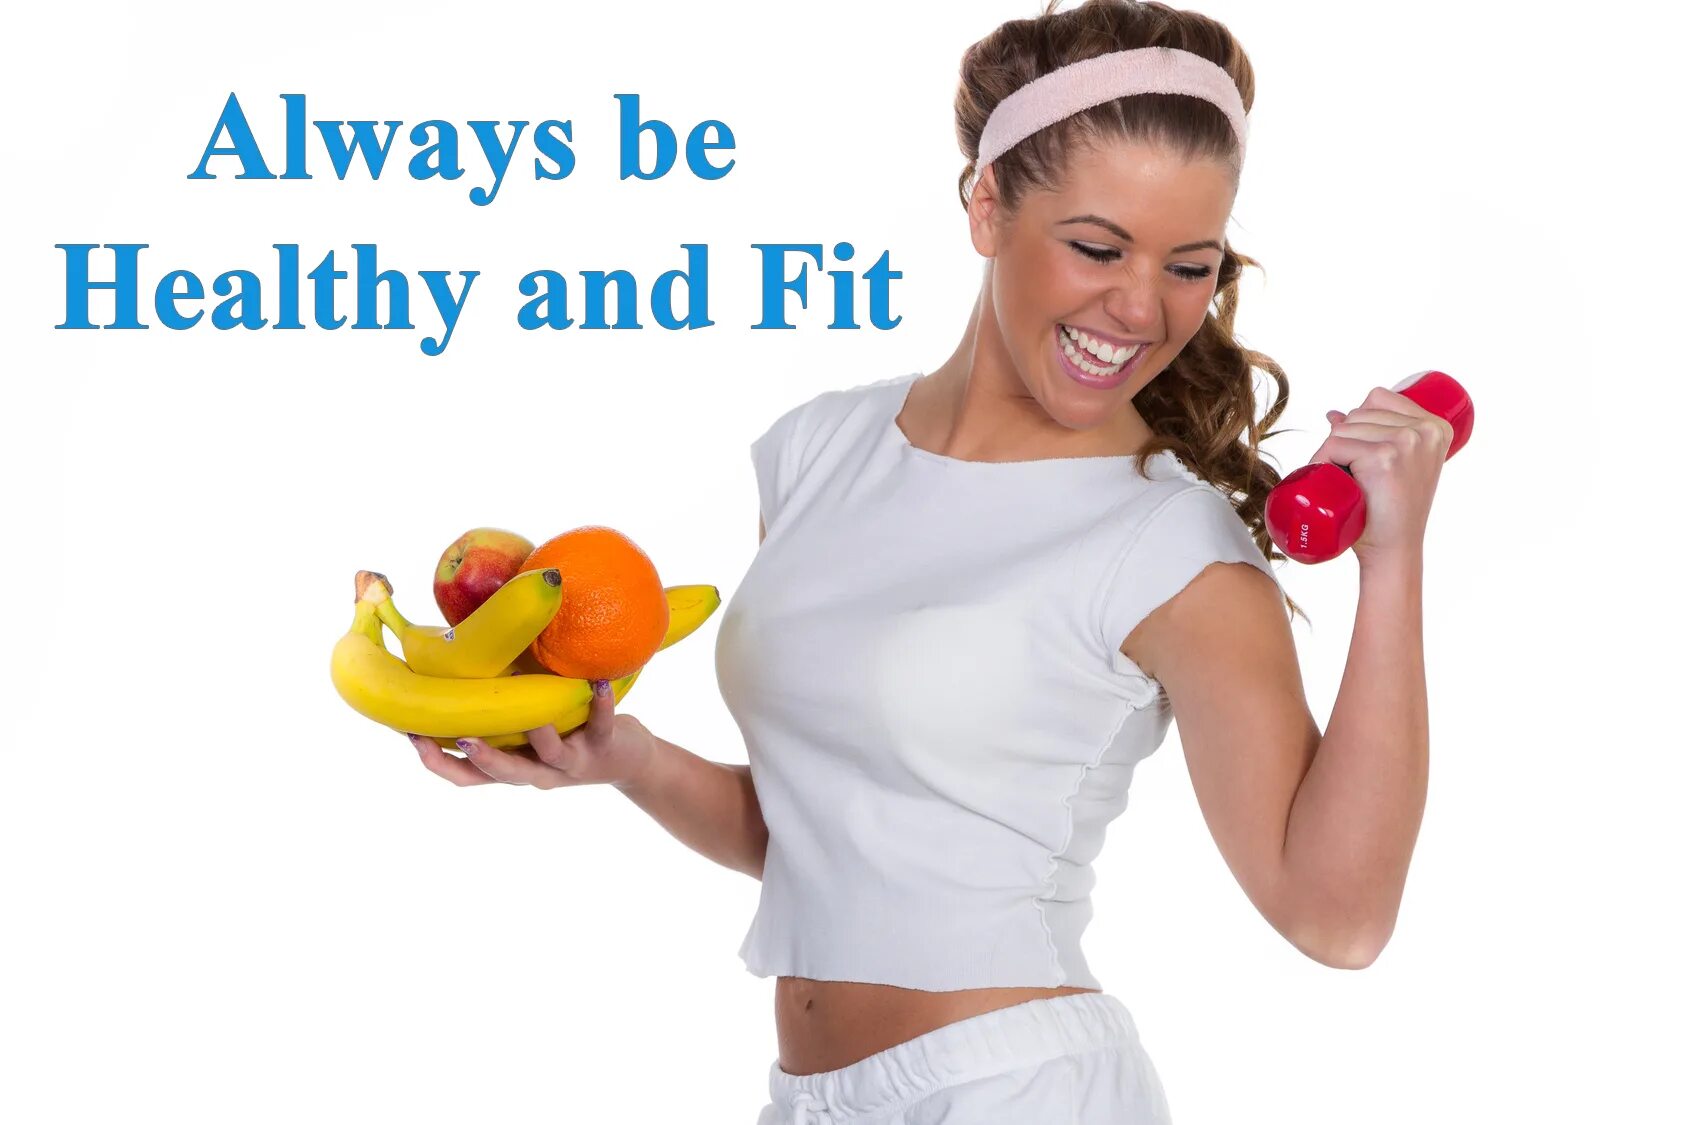 Healthy Lifestyle картинки. Healthy Lifestyle надпись. Диета похудения реклама. Гайд по фитнесу и питанию. People sports to be healthy